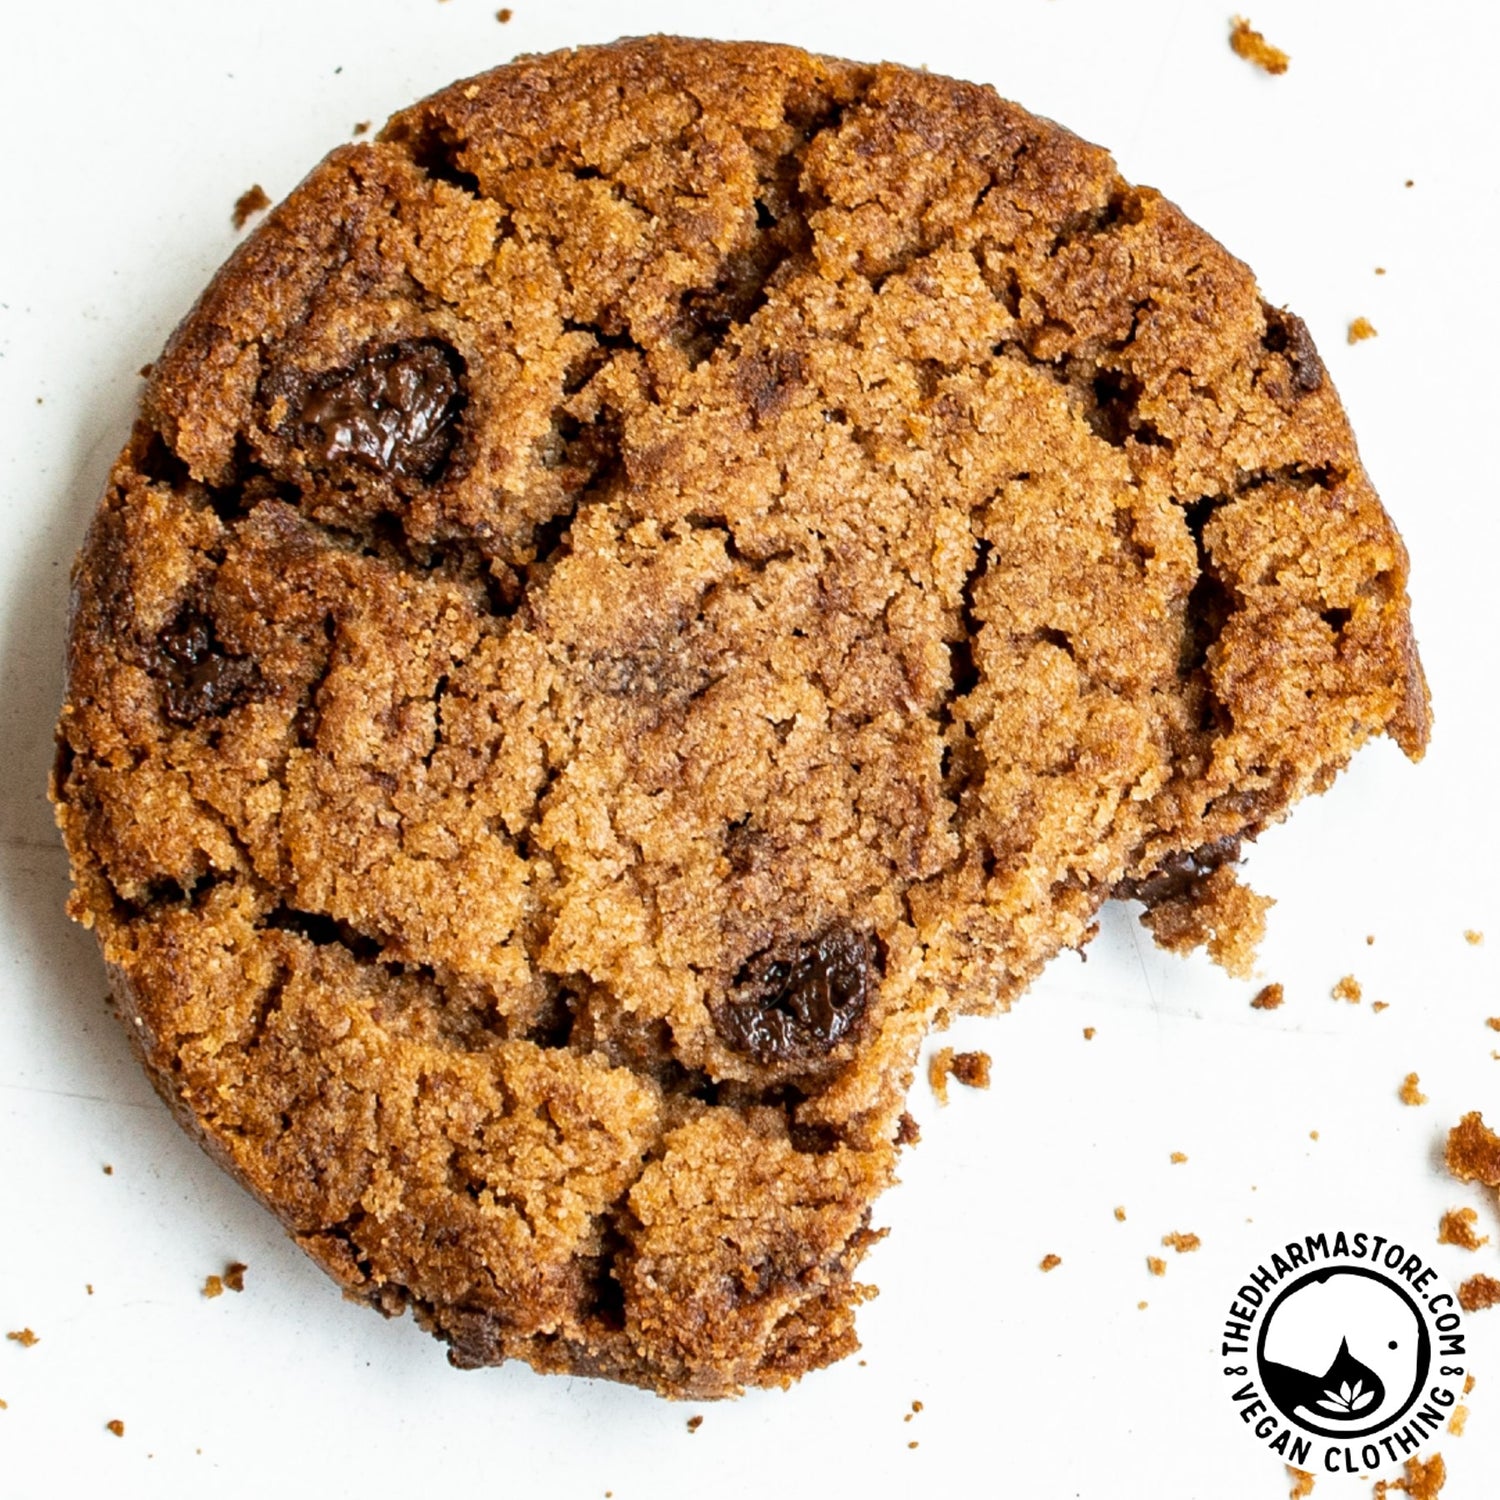 Indulge Guilt-Free: Bake The Best Vegan Chocolate Chip Cookies!